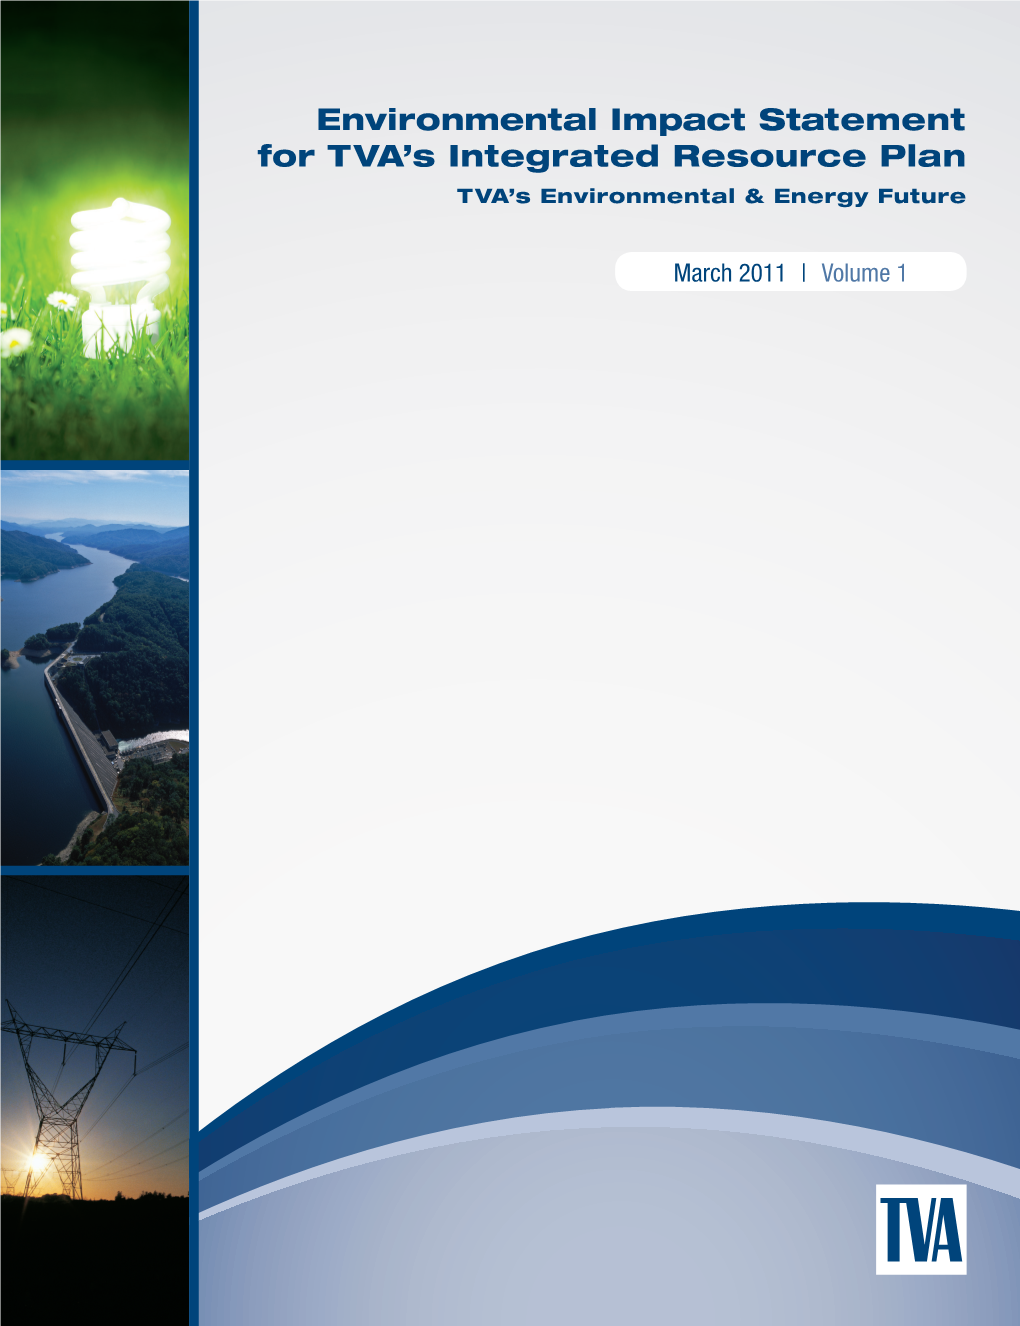 TVA 2011 Environmental Impact Statement for TVA's Integrated